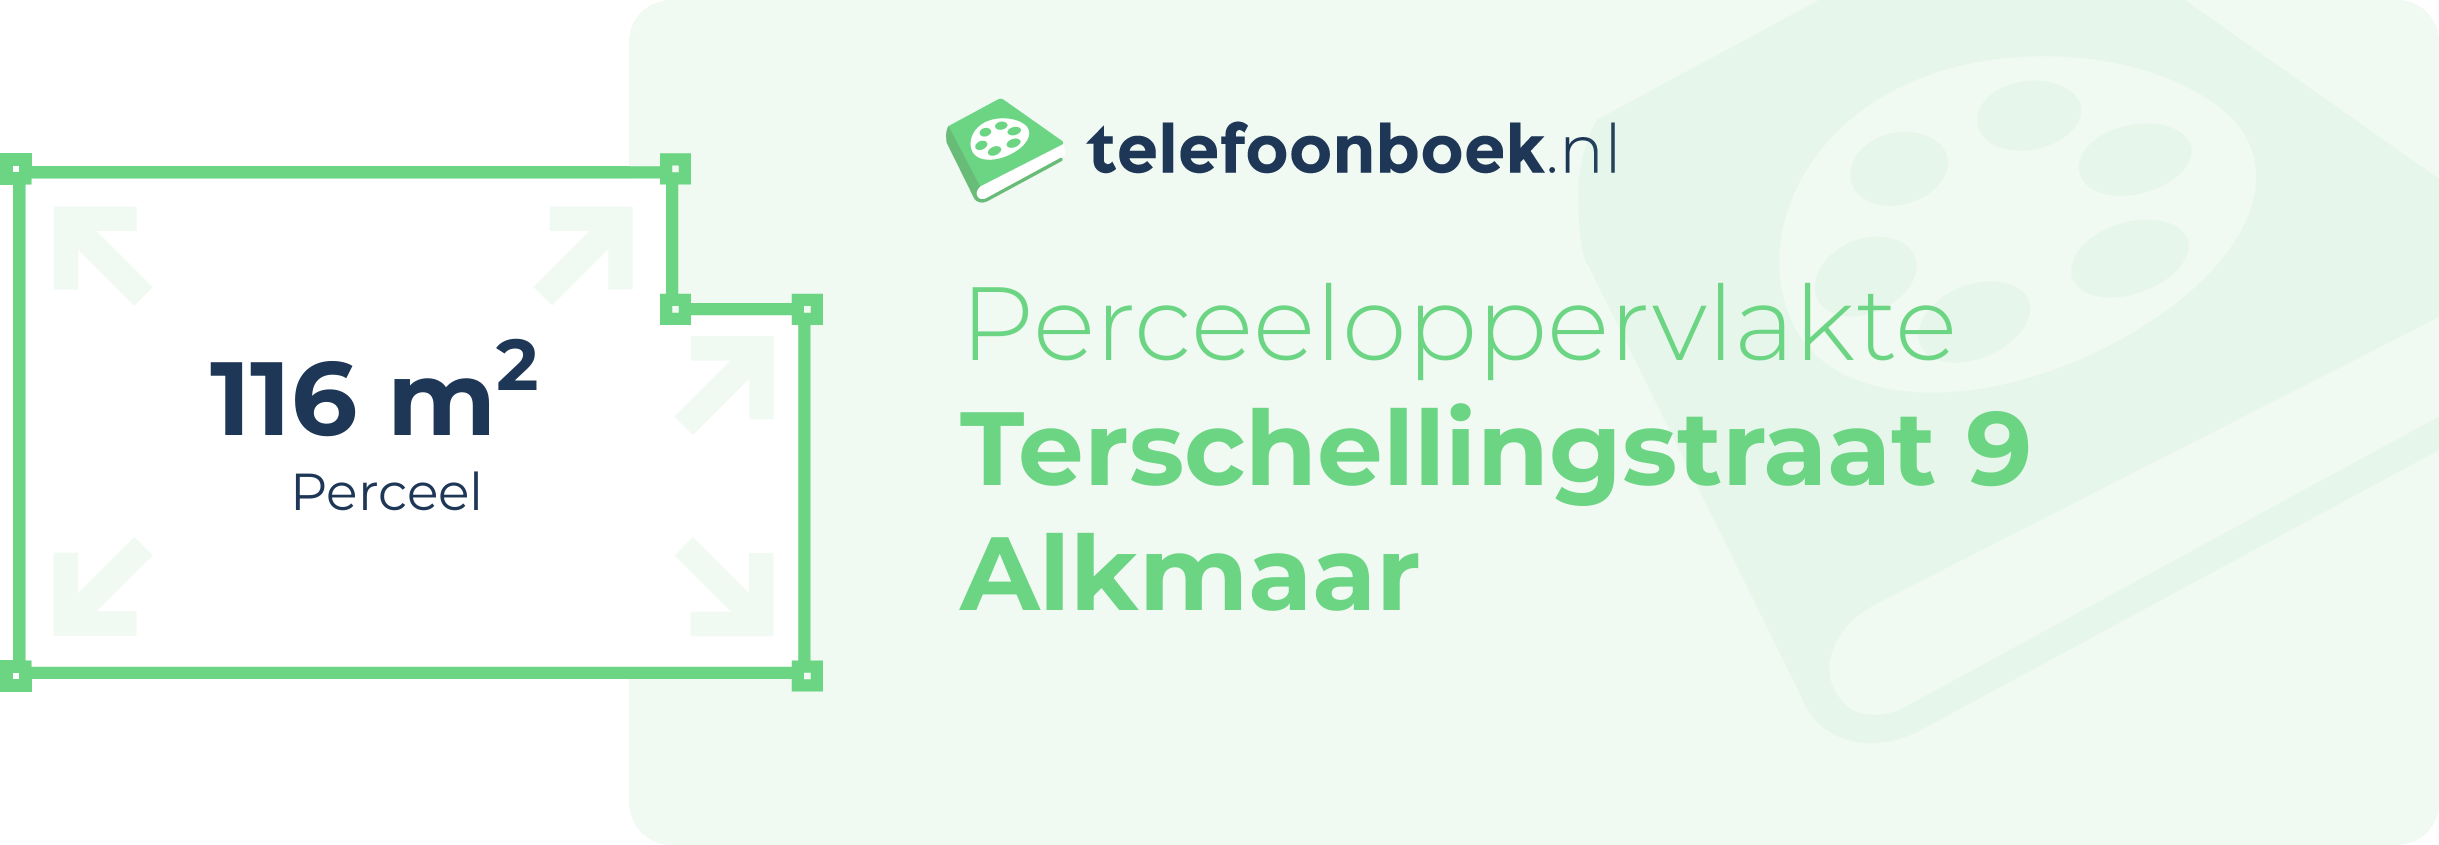 Perceeloppervlakte Terschellingstraat 9 Alkmaar